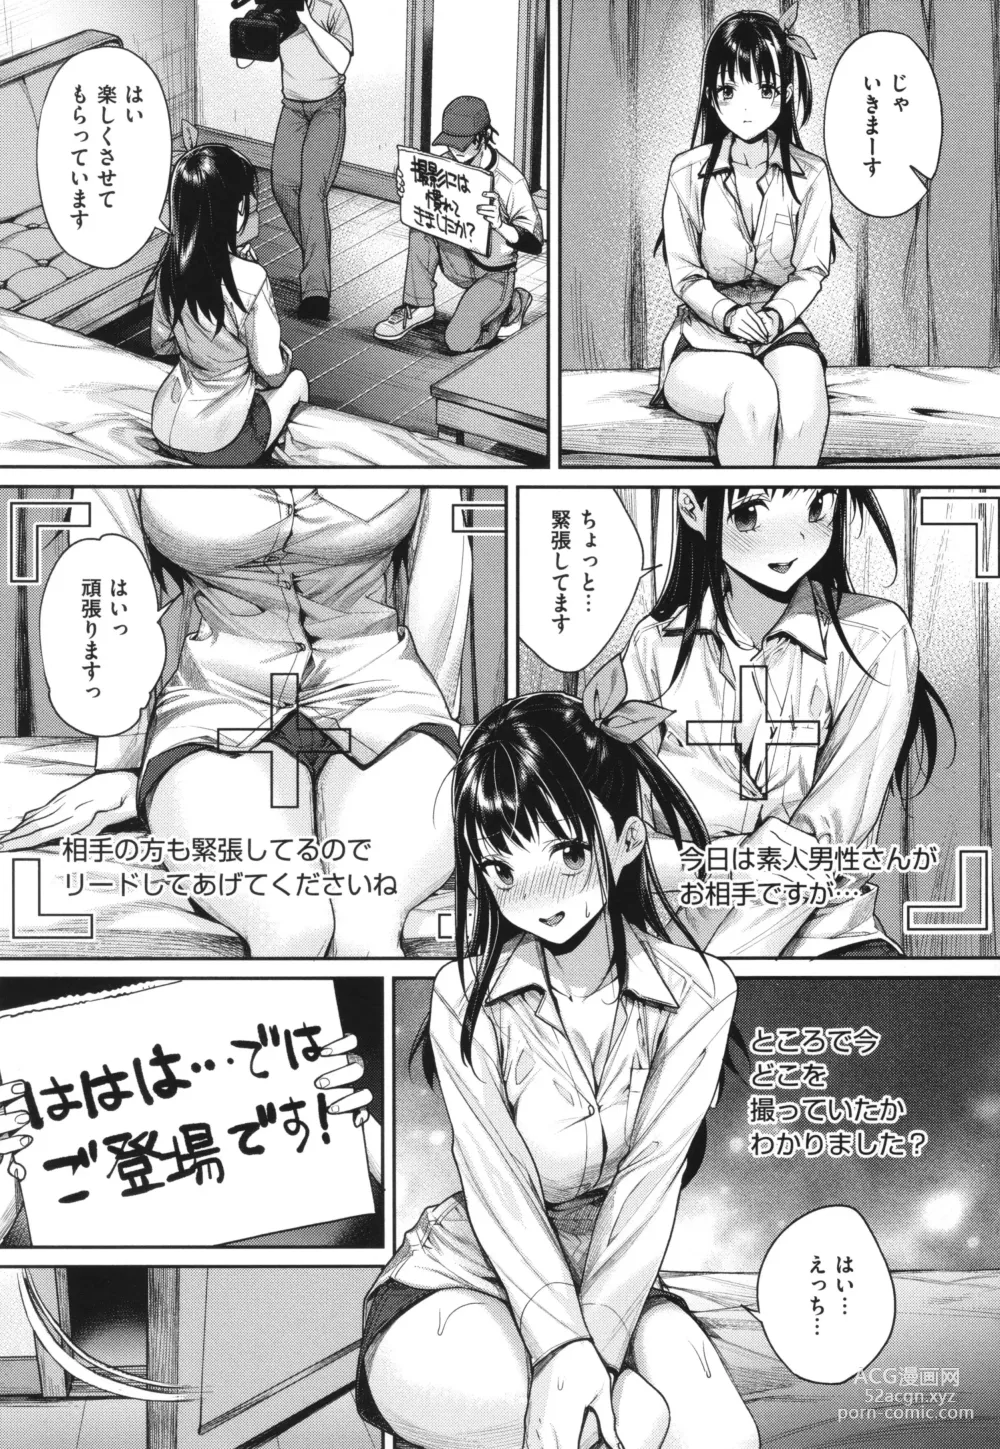 Page 188 of manga You & I